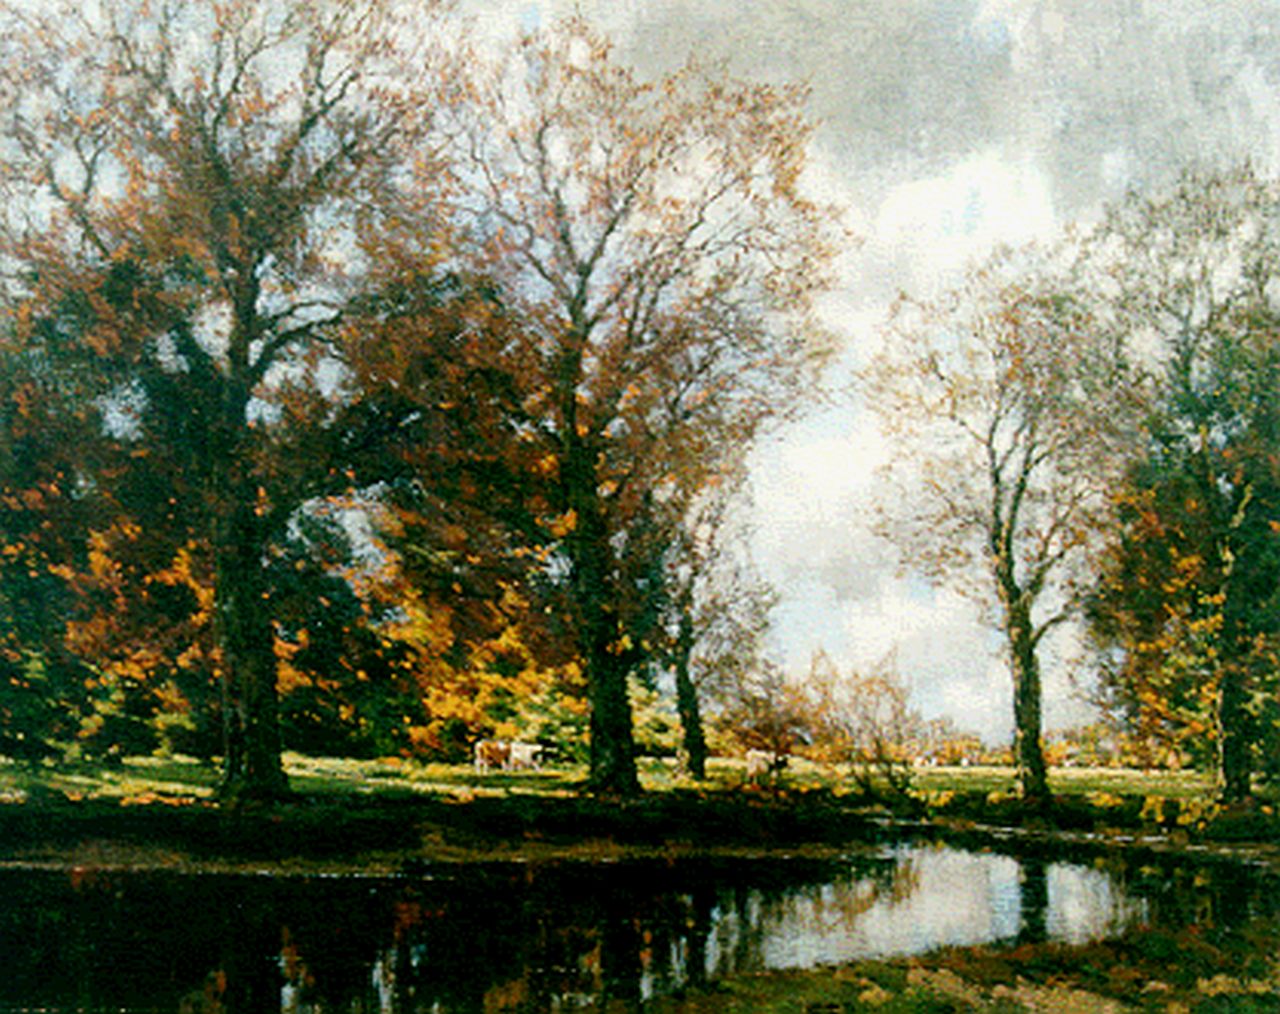 Gorter A.M.  | 'Arnold' Marc Gorter, Autumn landscape with cows, oil on canvas 67.6 x 84.9 cm, signed l.r.